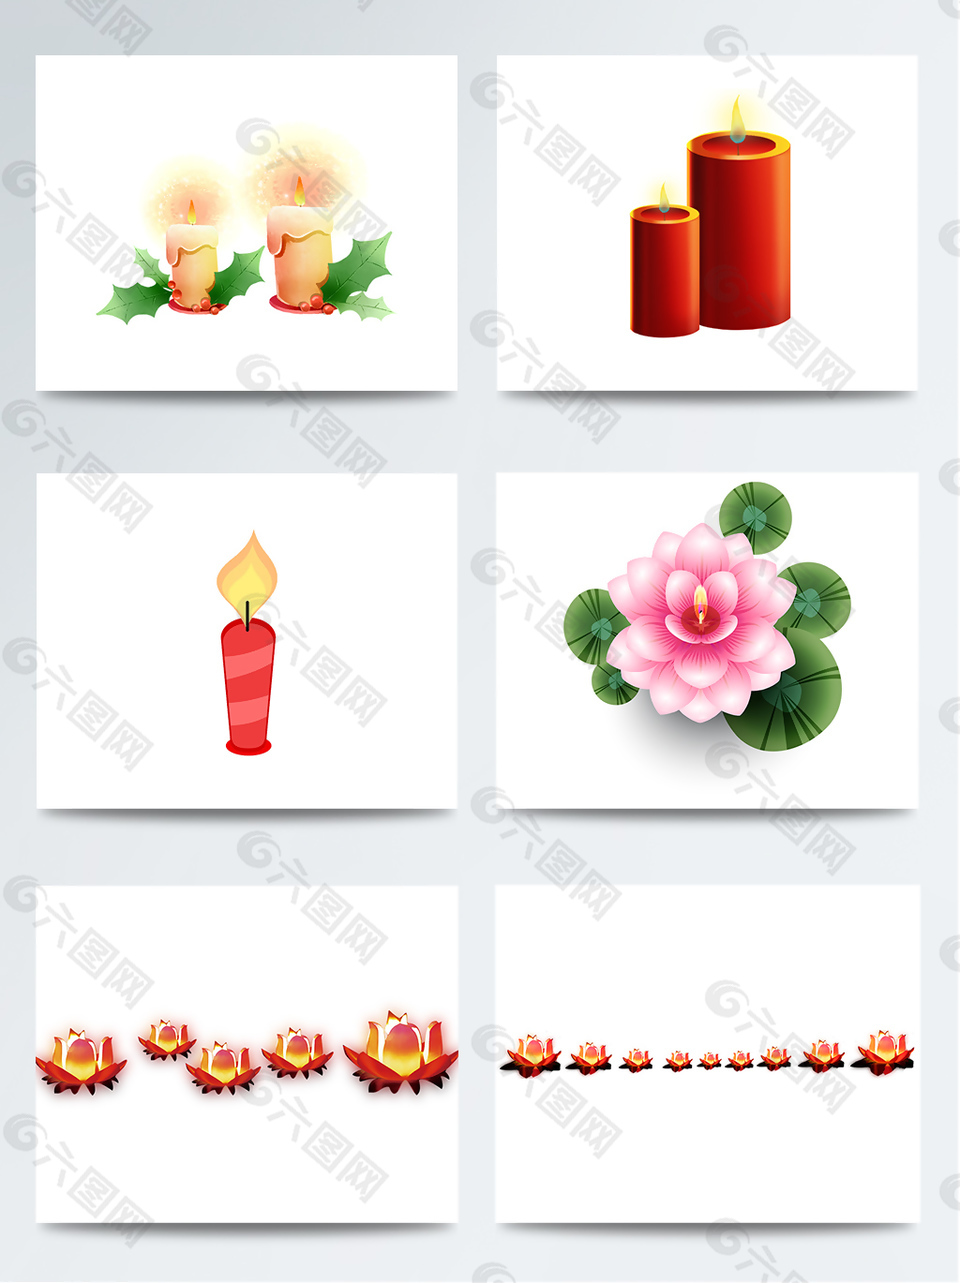 蜡烛PNG格式